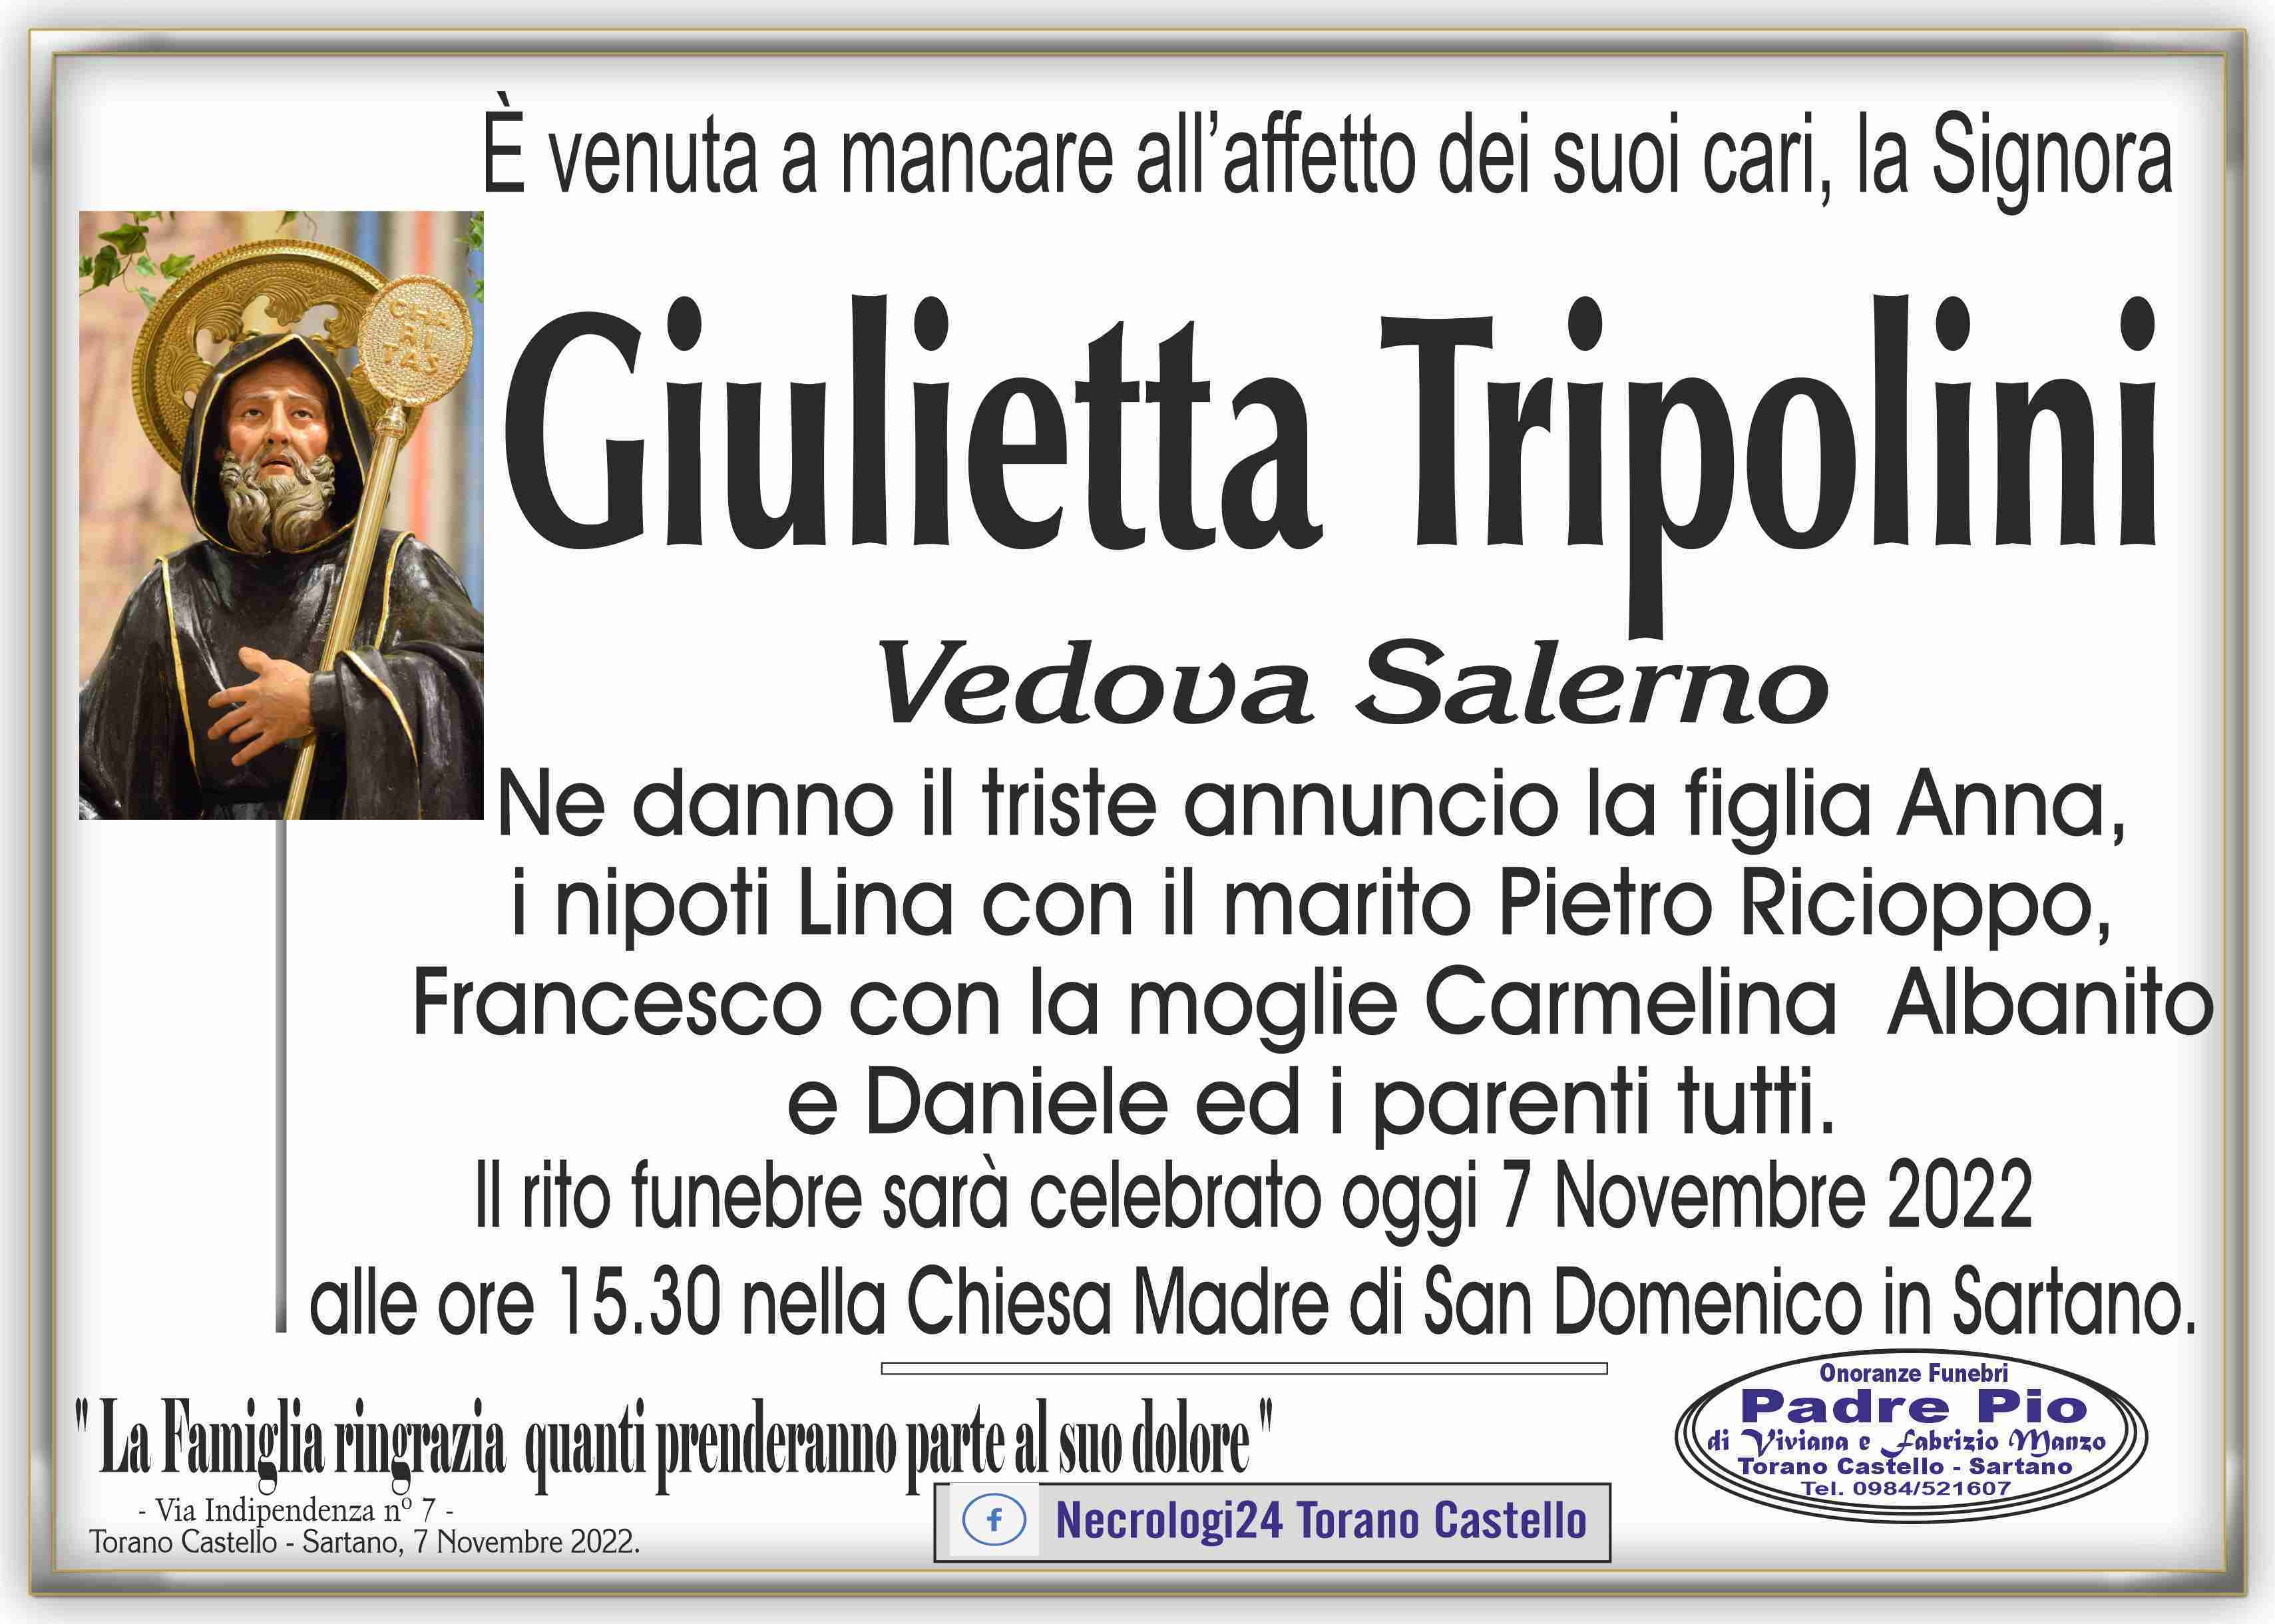 Giulietta Tripolini